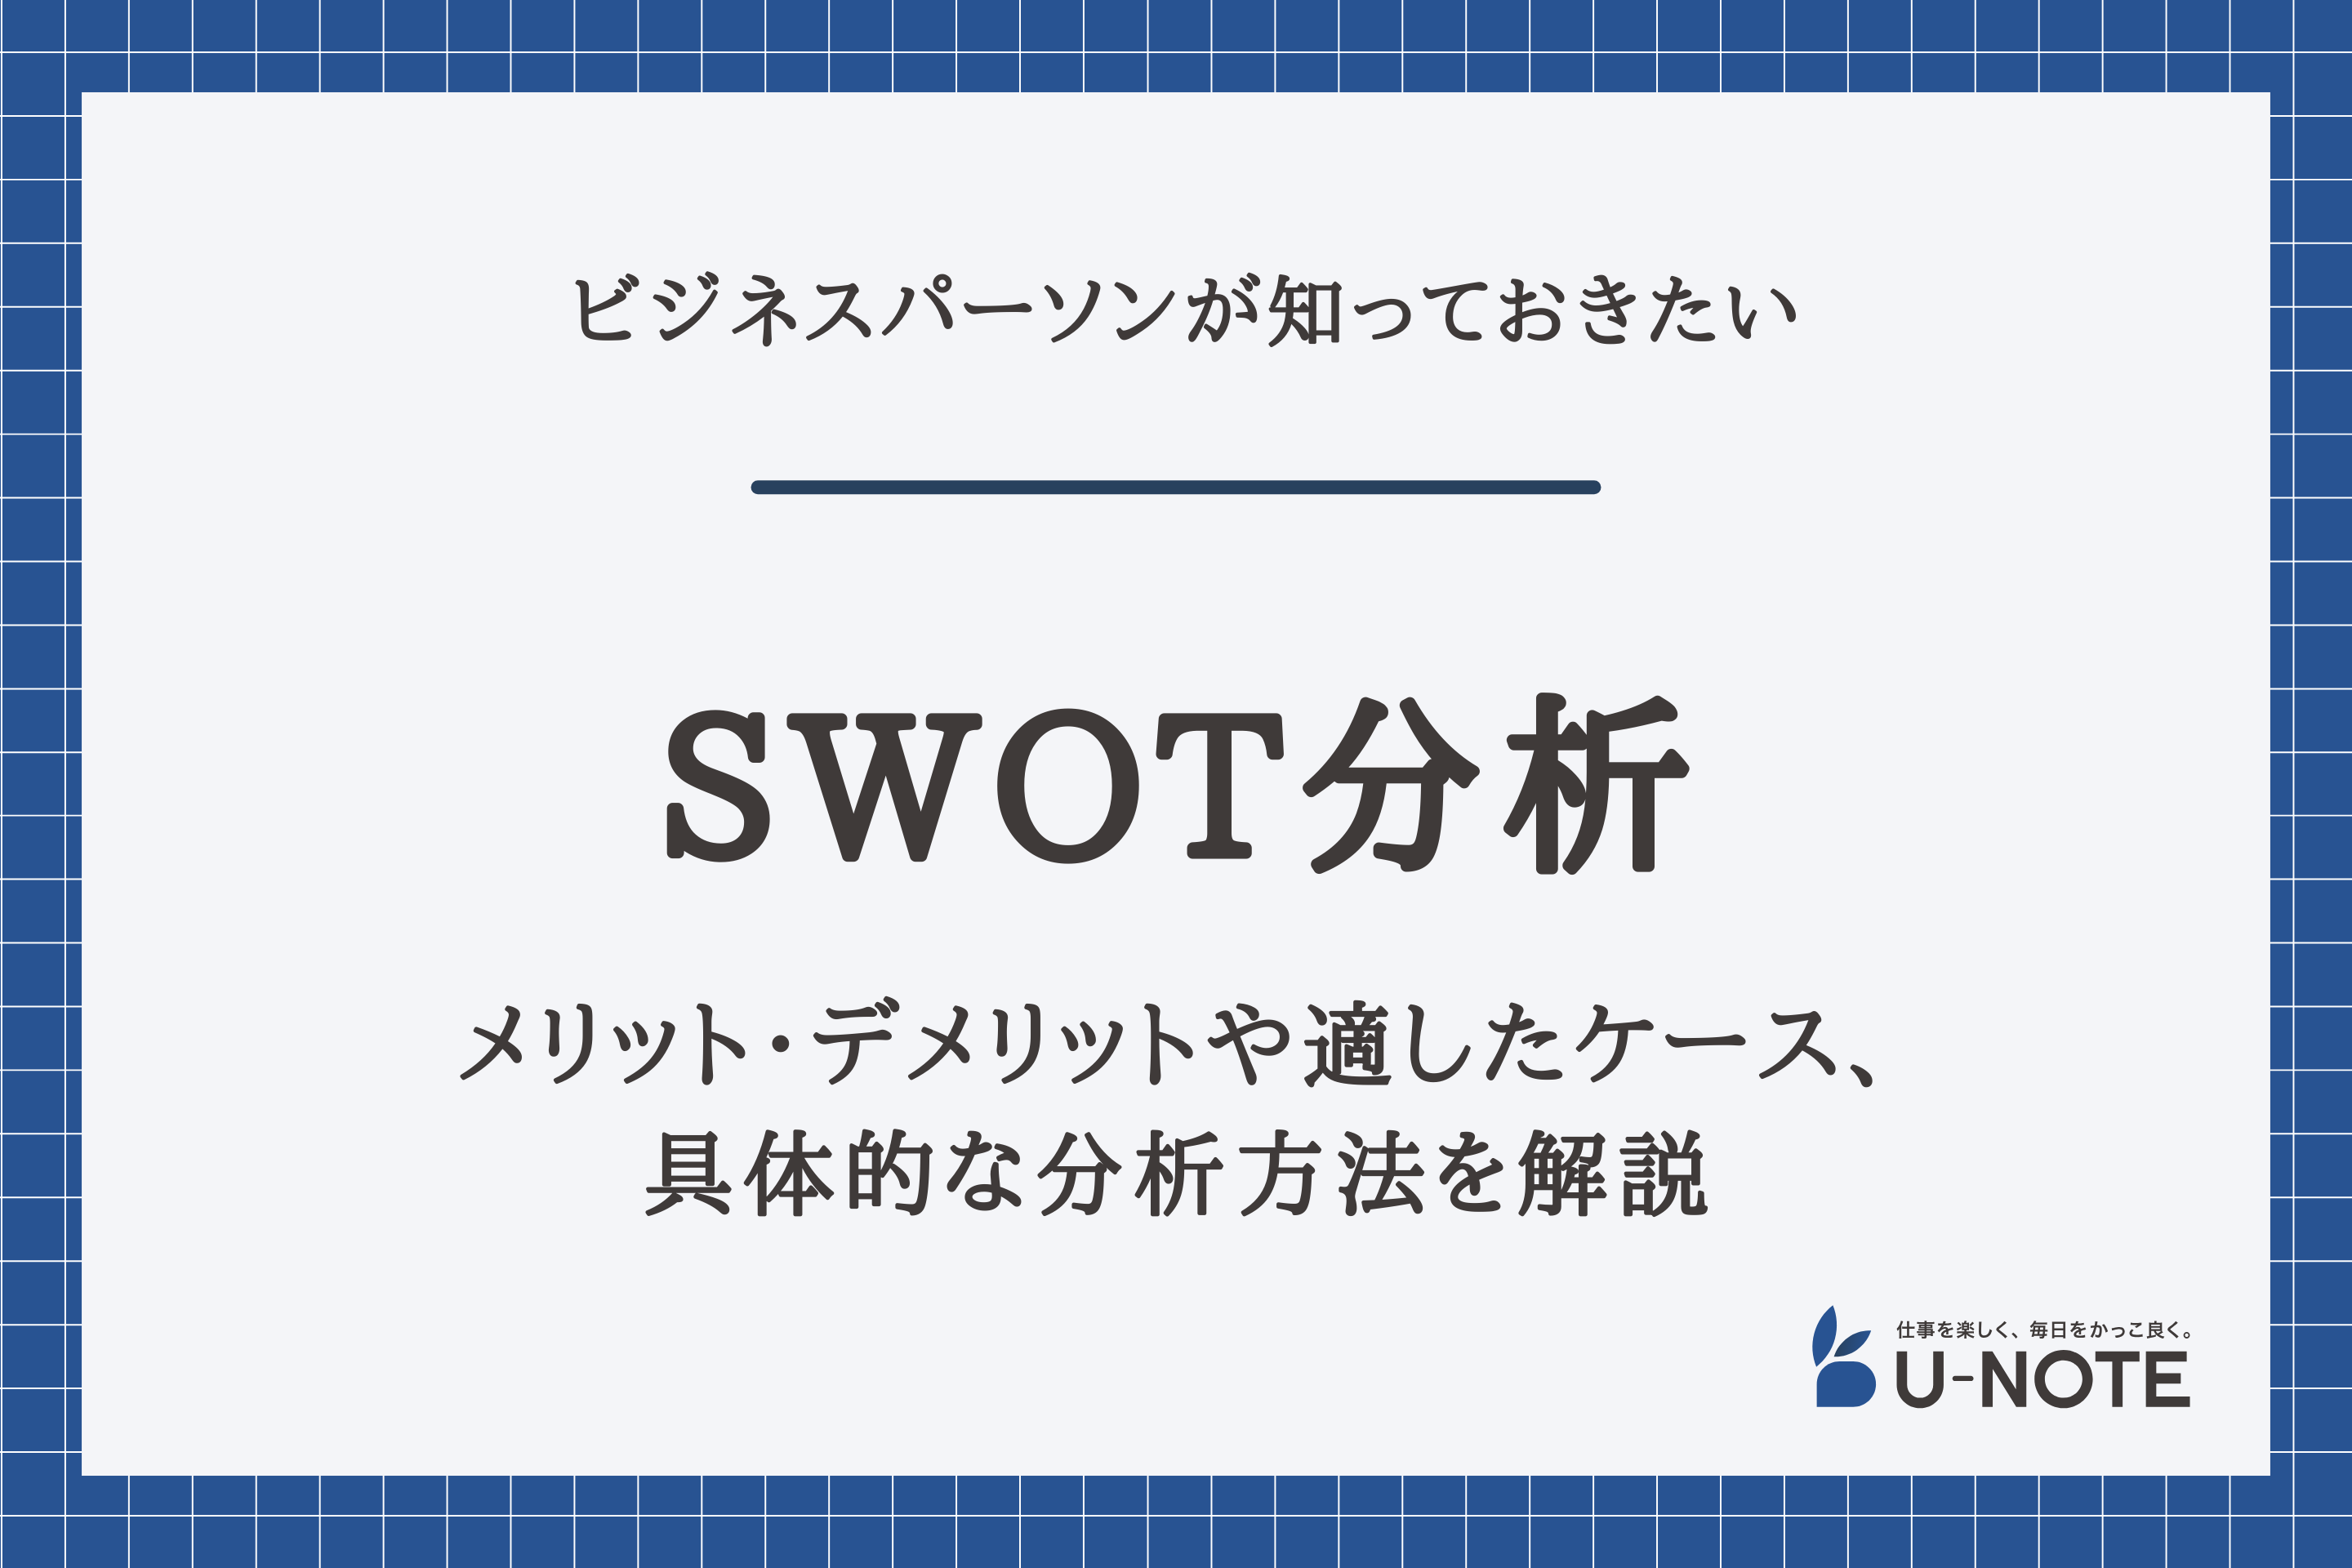 SWOT分析とは？メリット・デメリットや適したケース、具体的な分析方法を解説